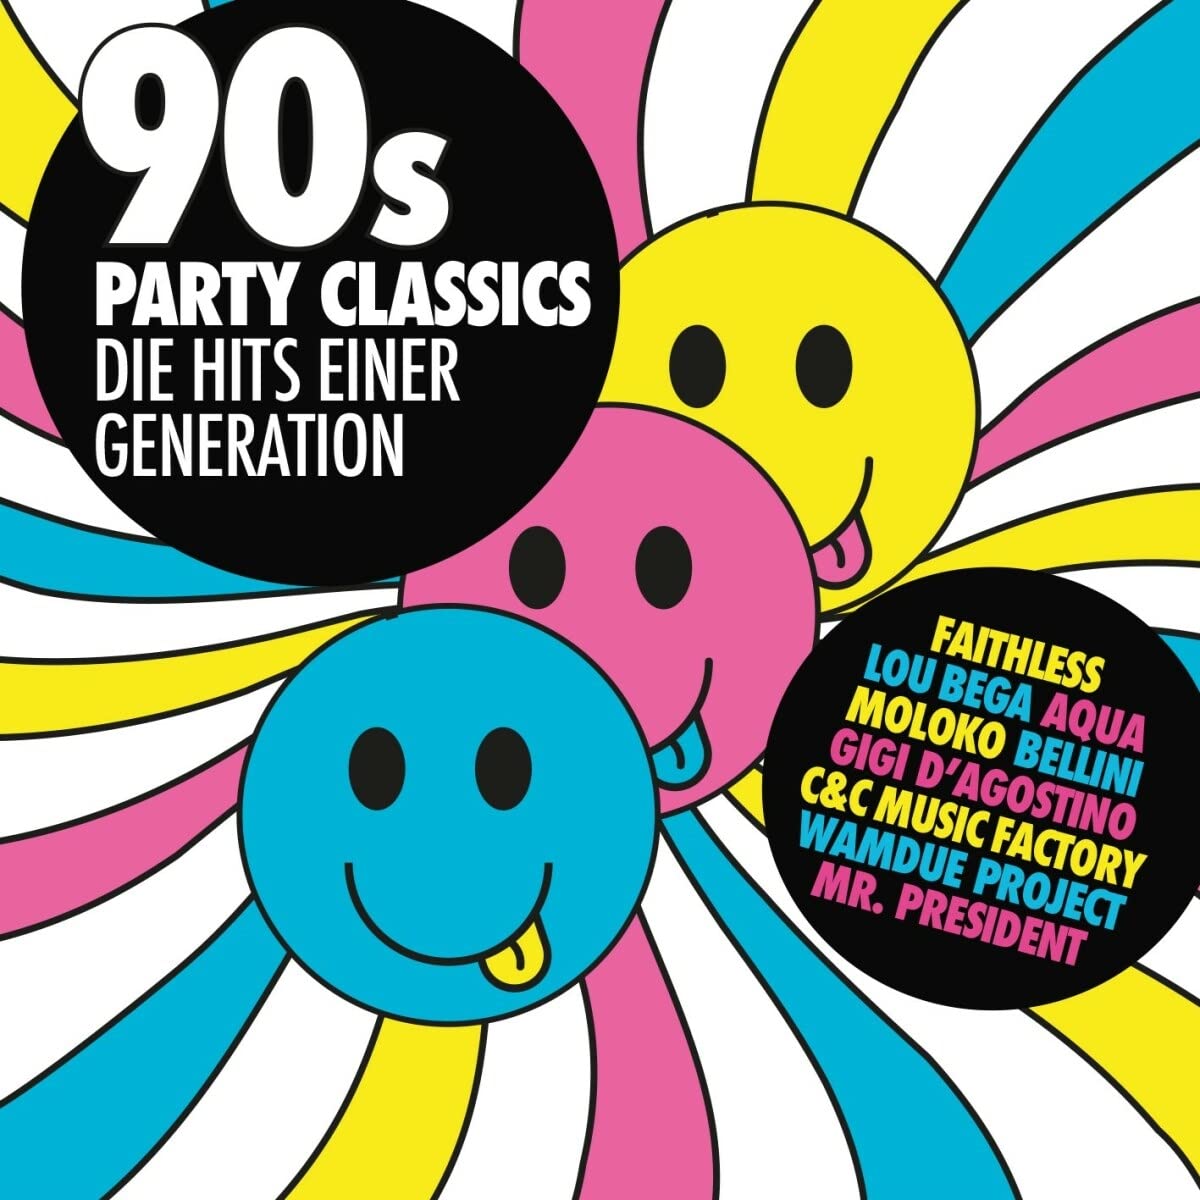 90s Party Classics Vol. 1 - Hits Einer Generation (verzoek)